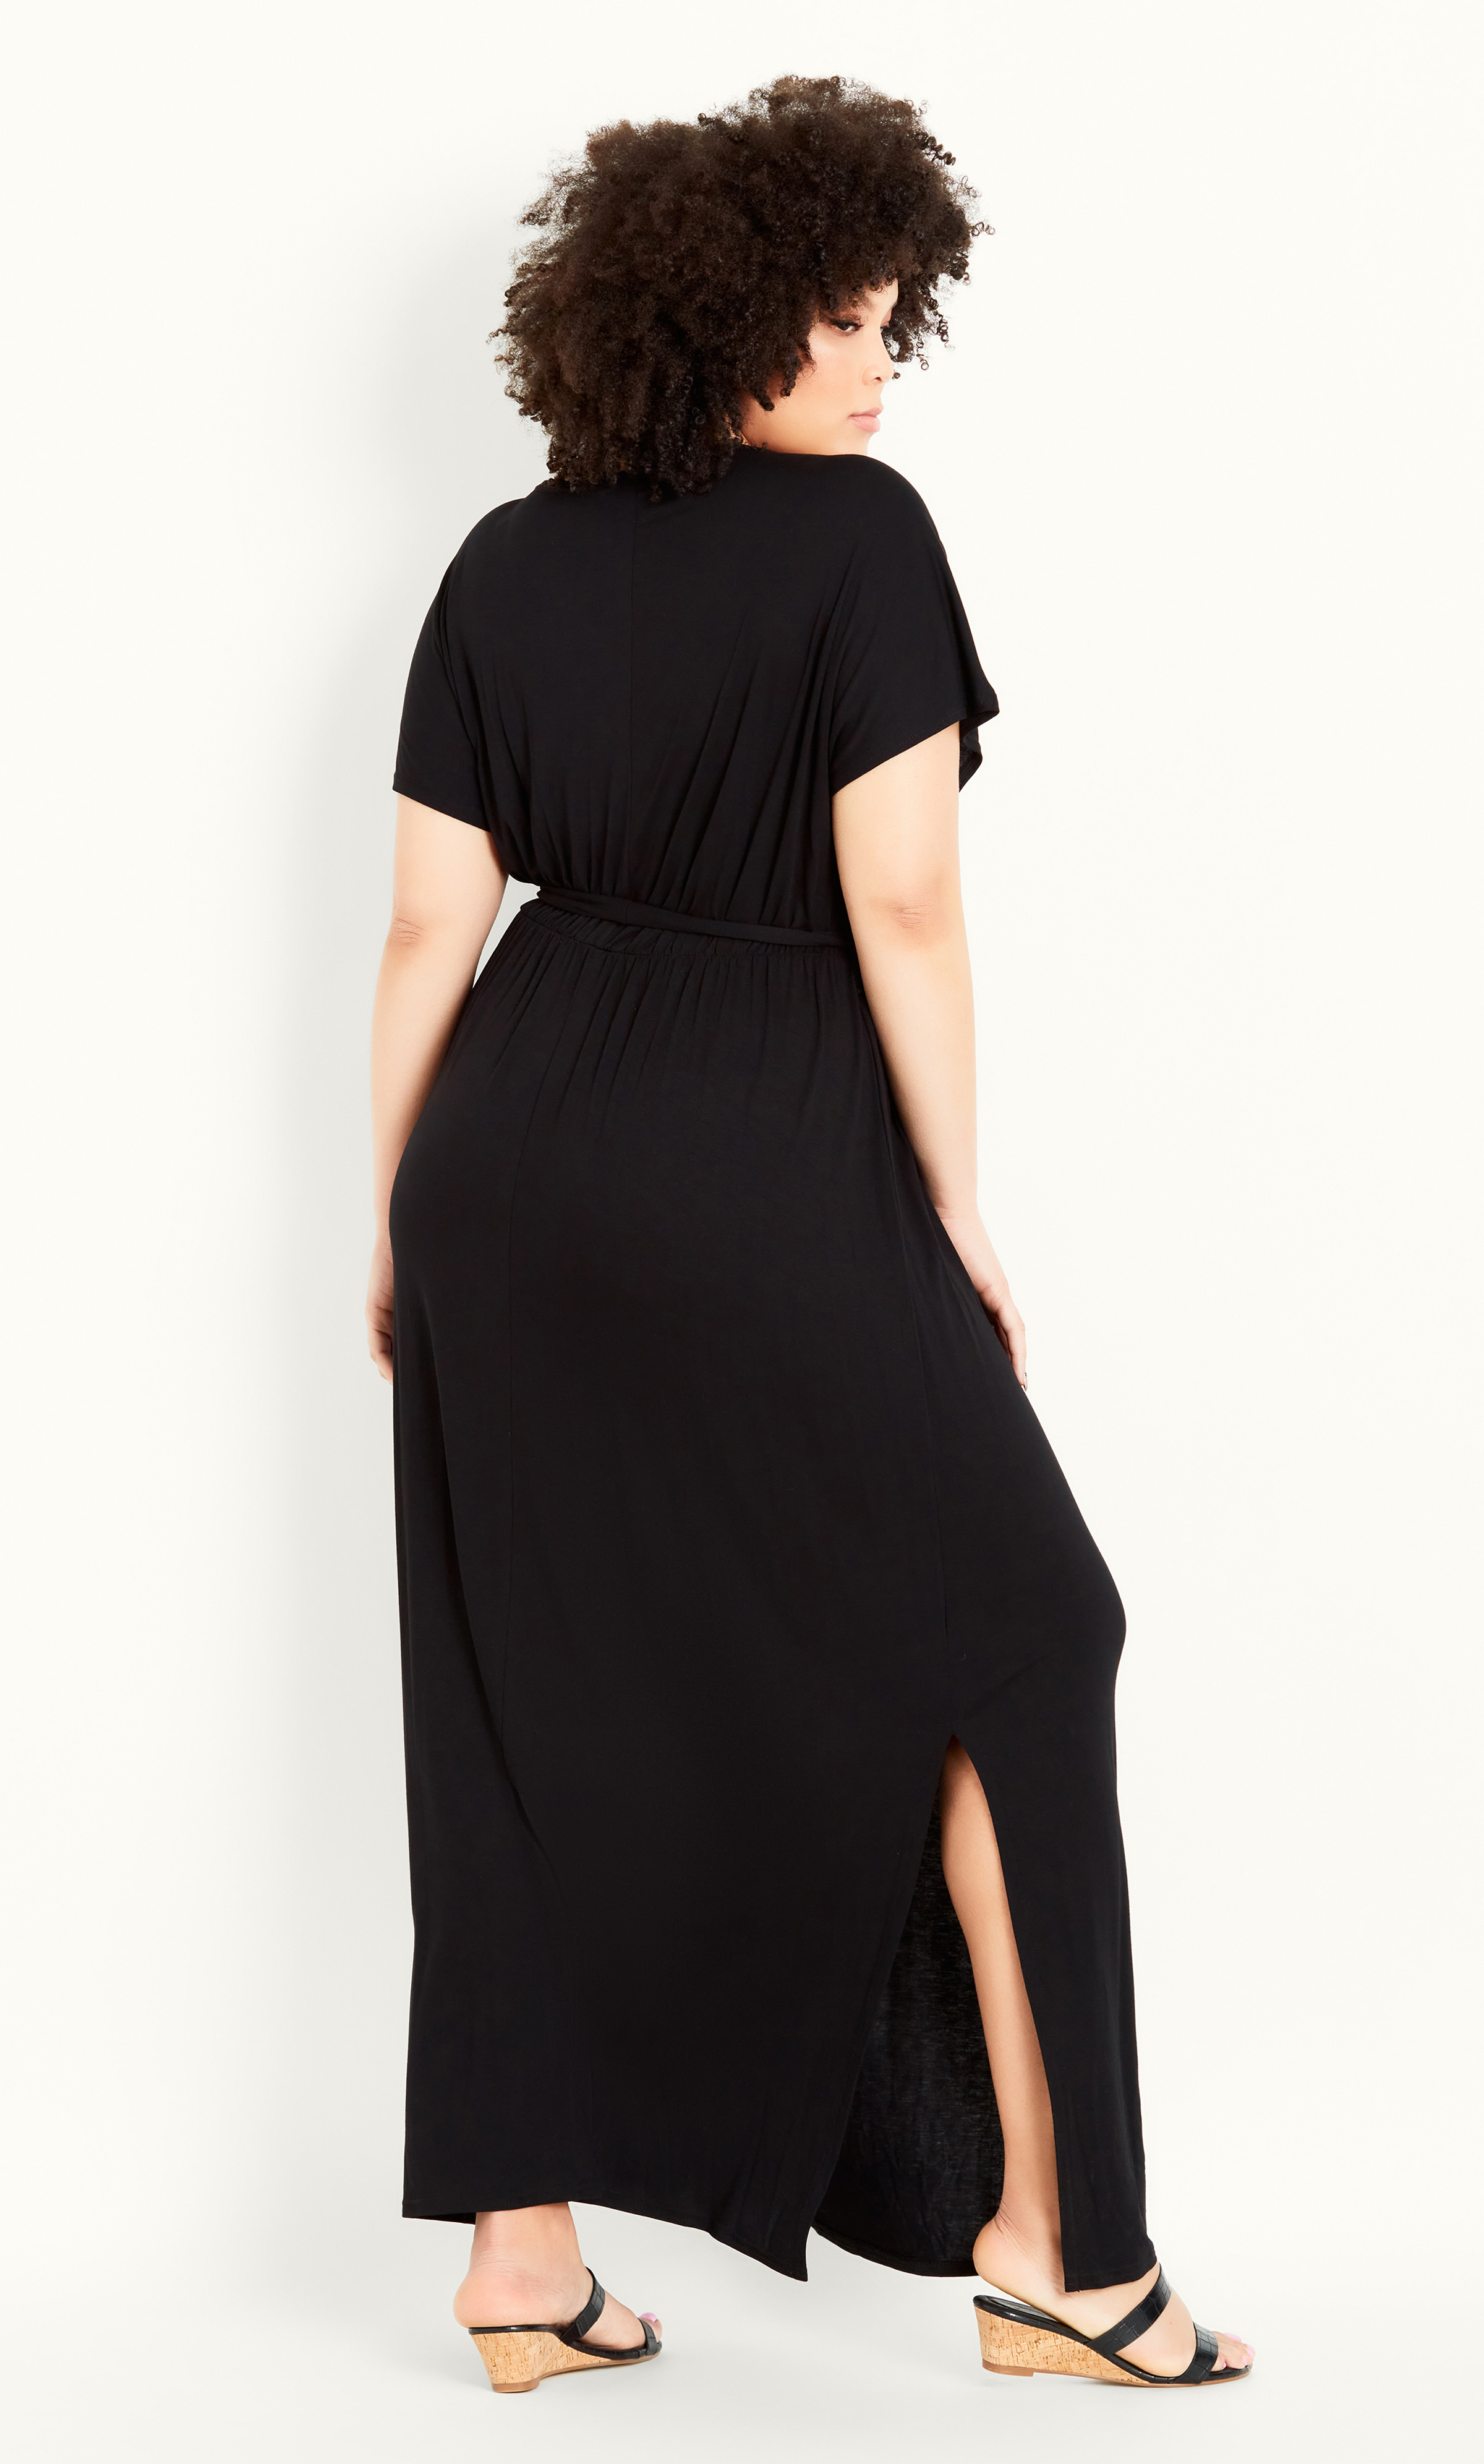 Women's Plus Size Wrap Plain Black Dress